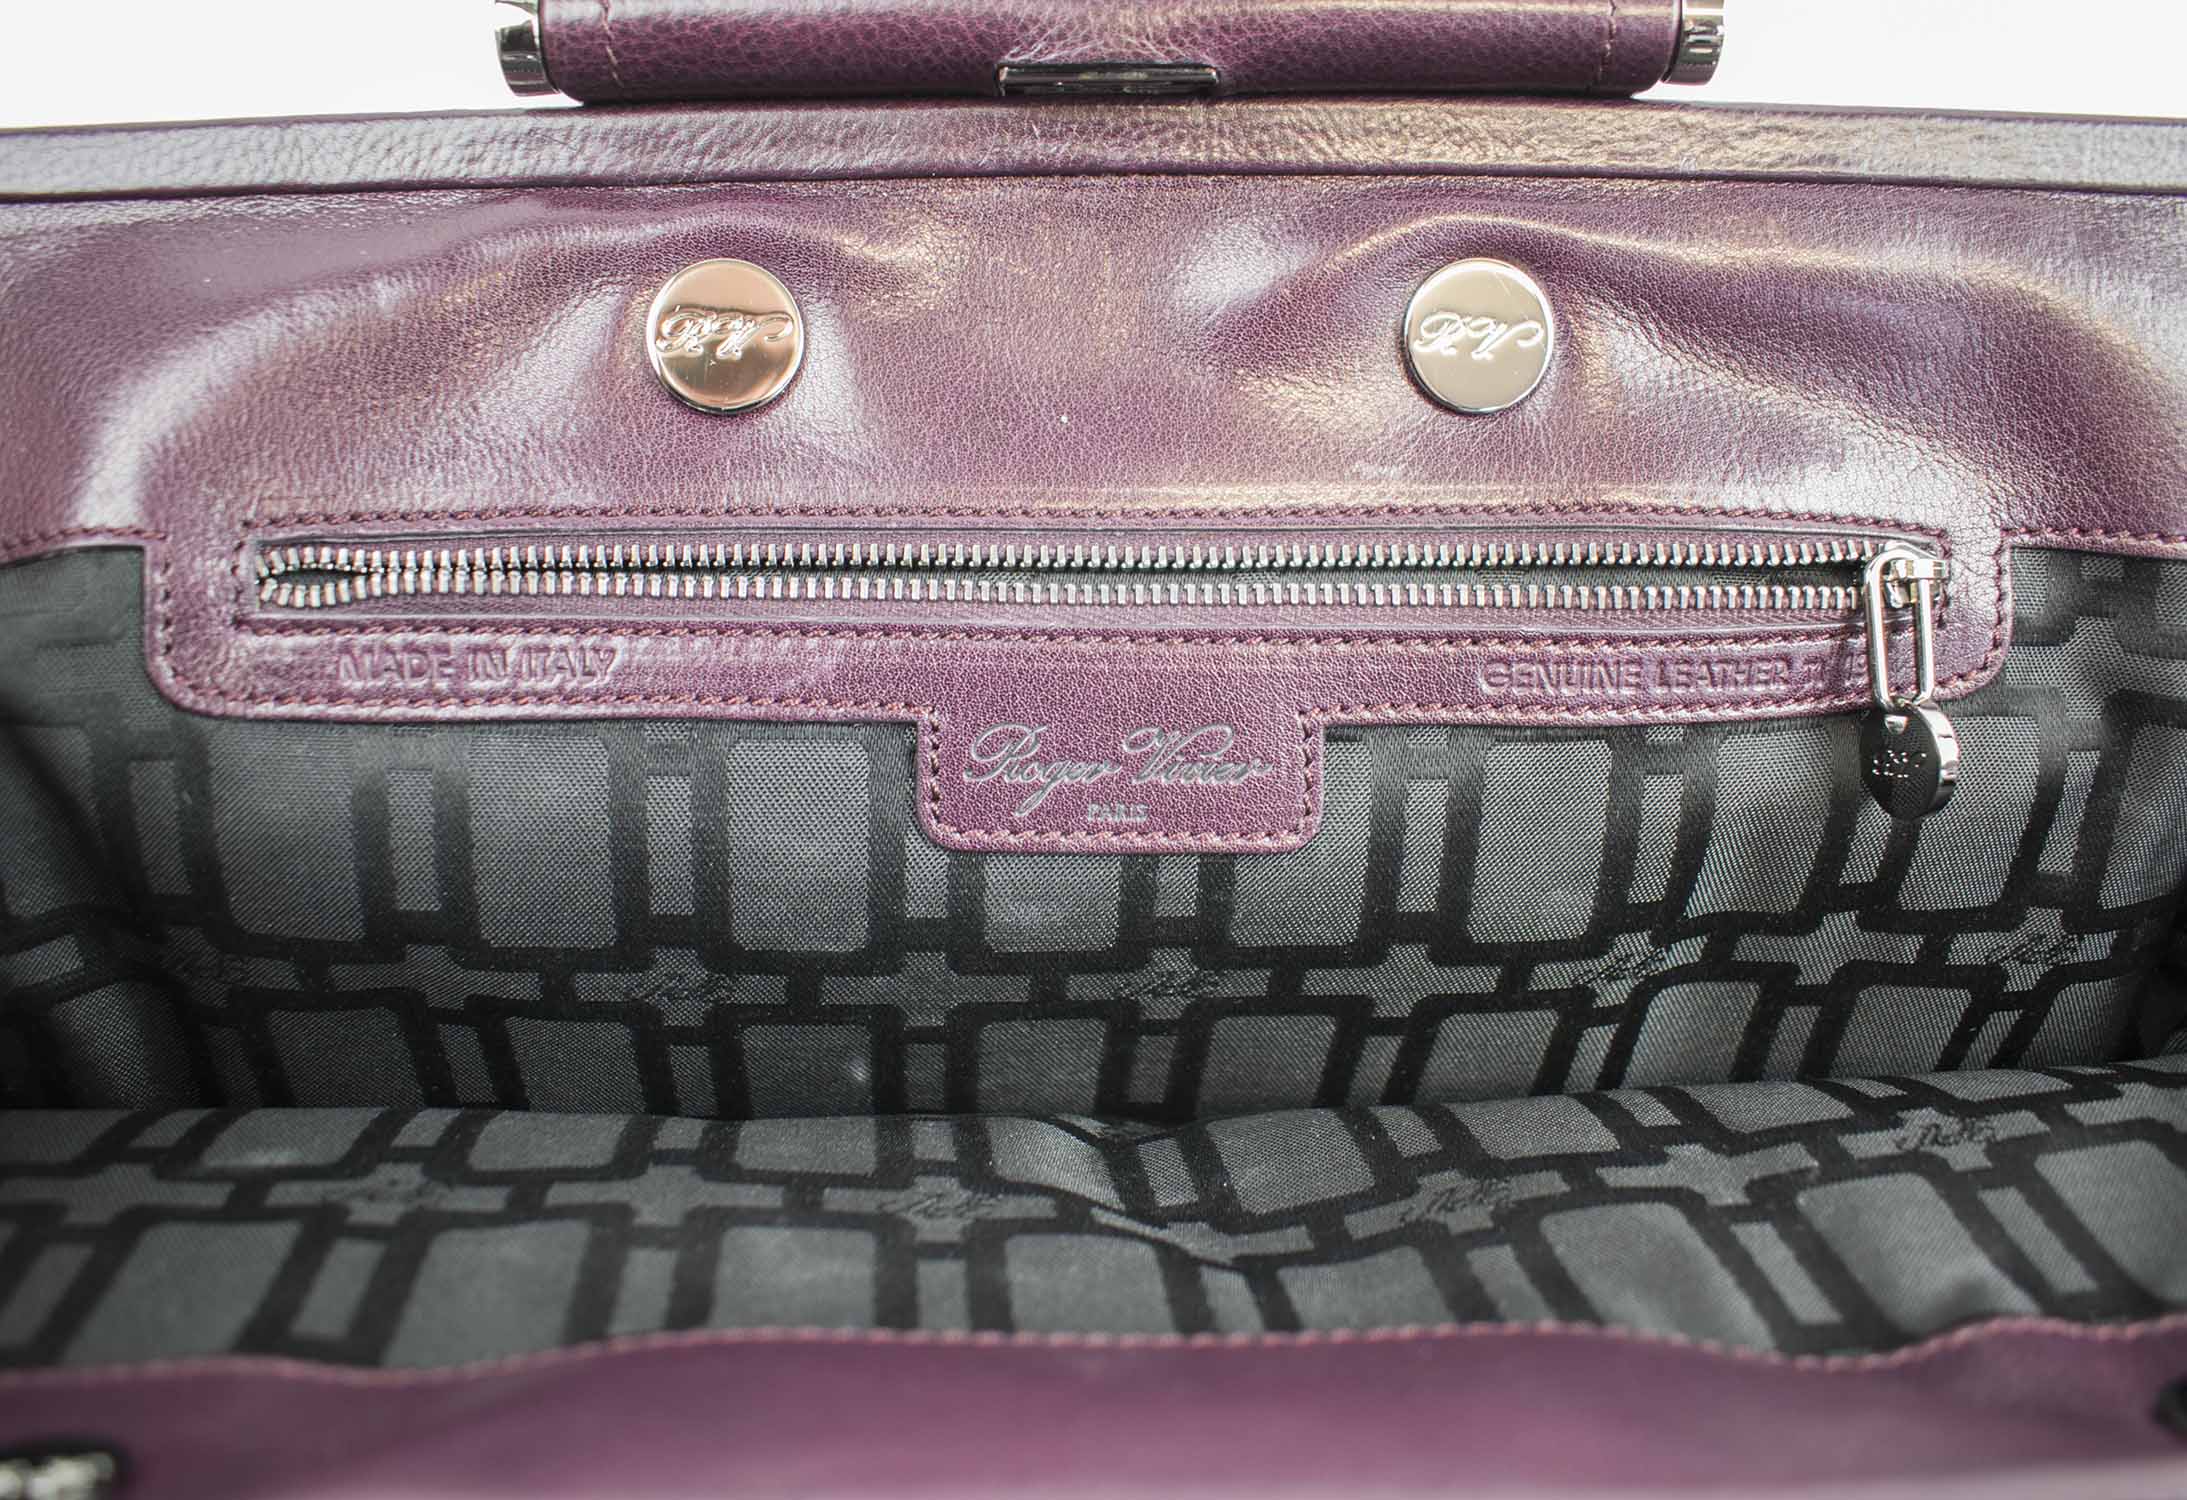 Black PU Leather Purse Handbag w/ Goldtone Hardware & Charm